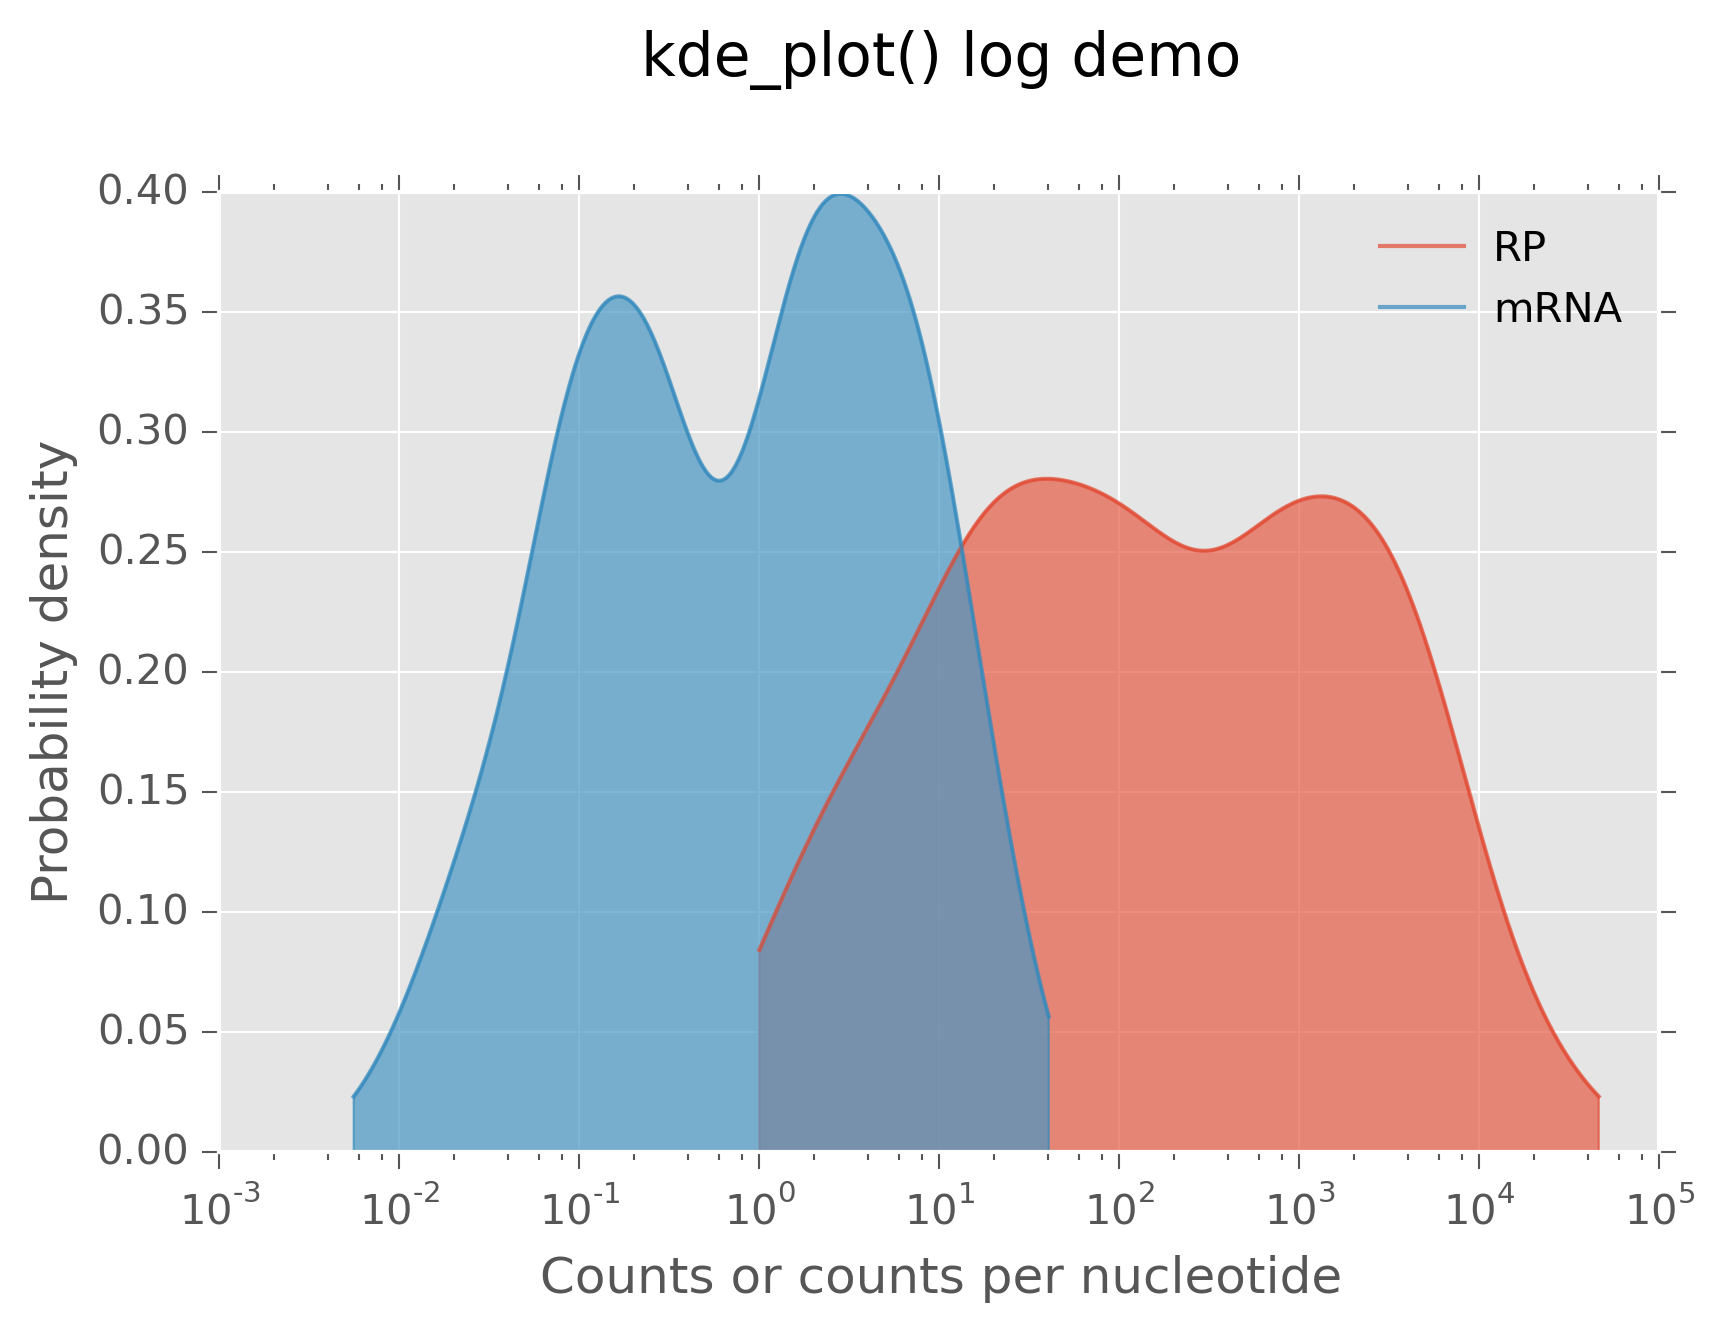 Kernel density estimate in log space